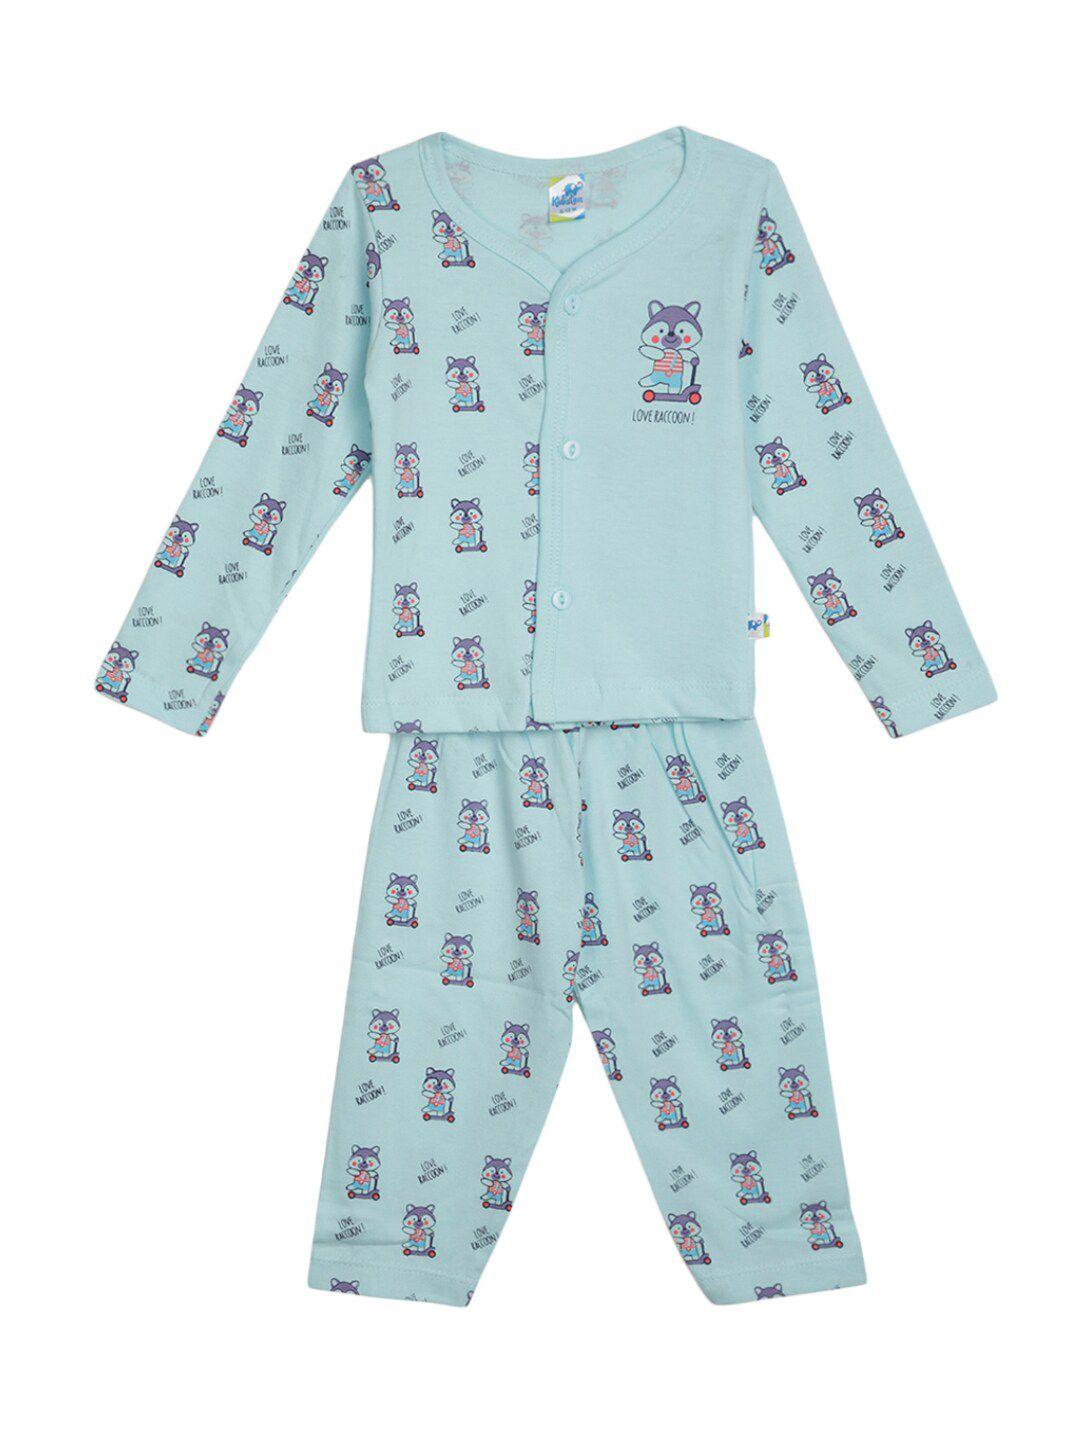 v-mart infants printed pure cotton t-shirt with pyjamas